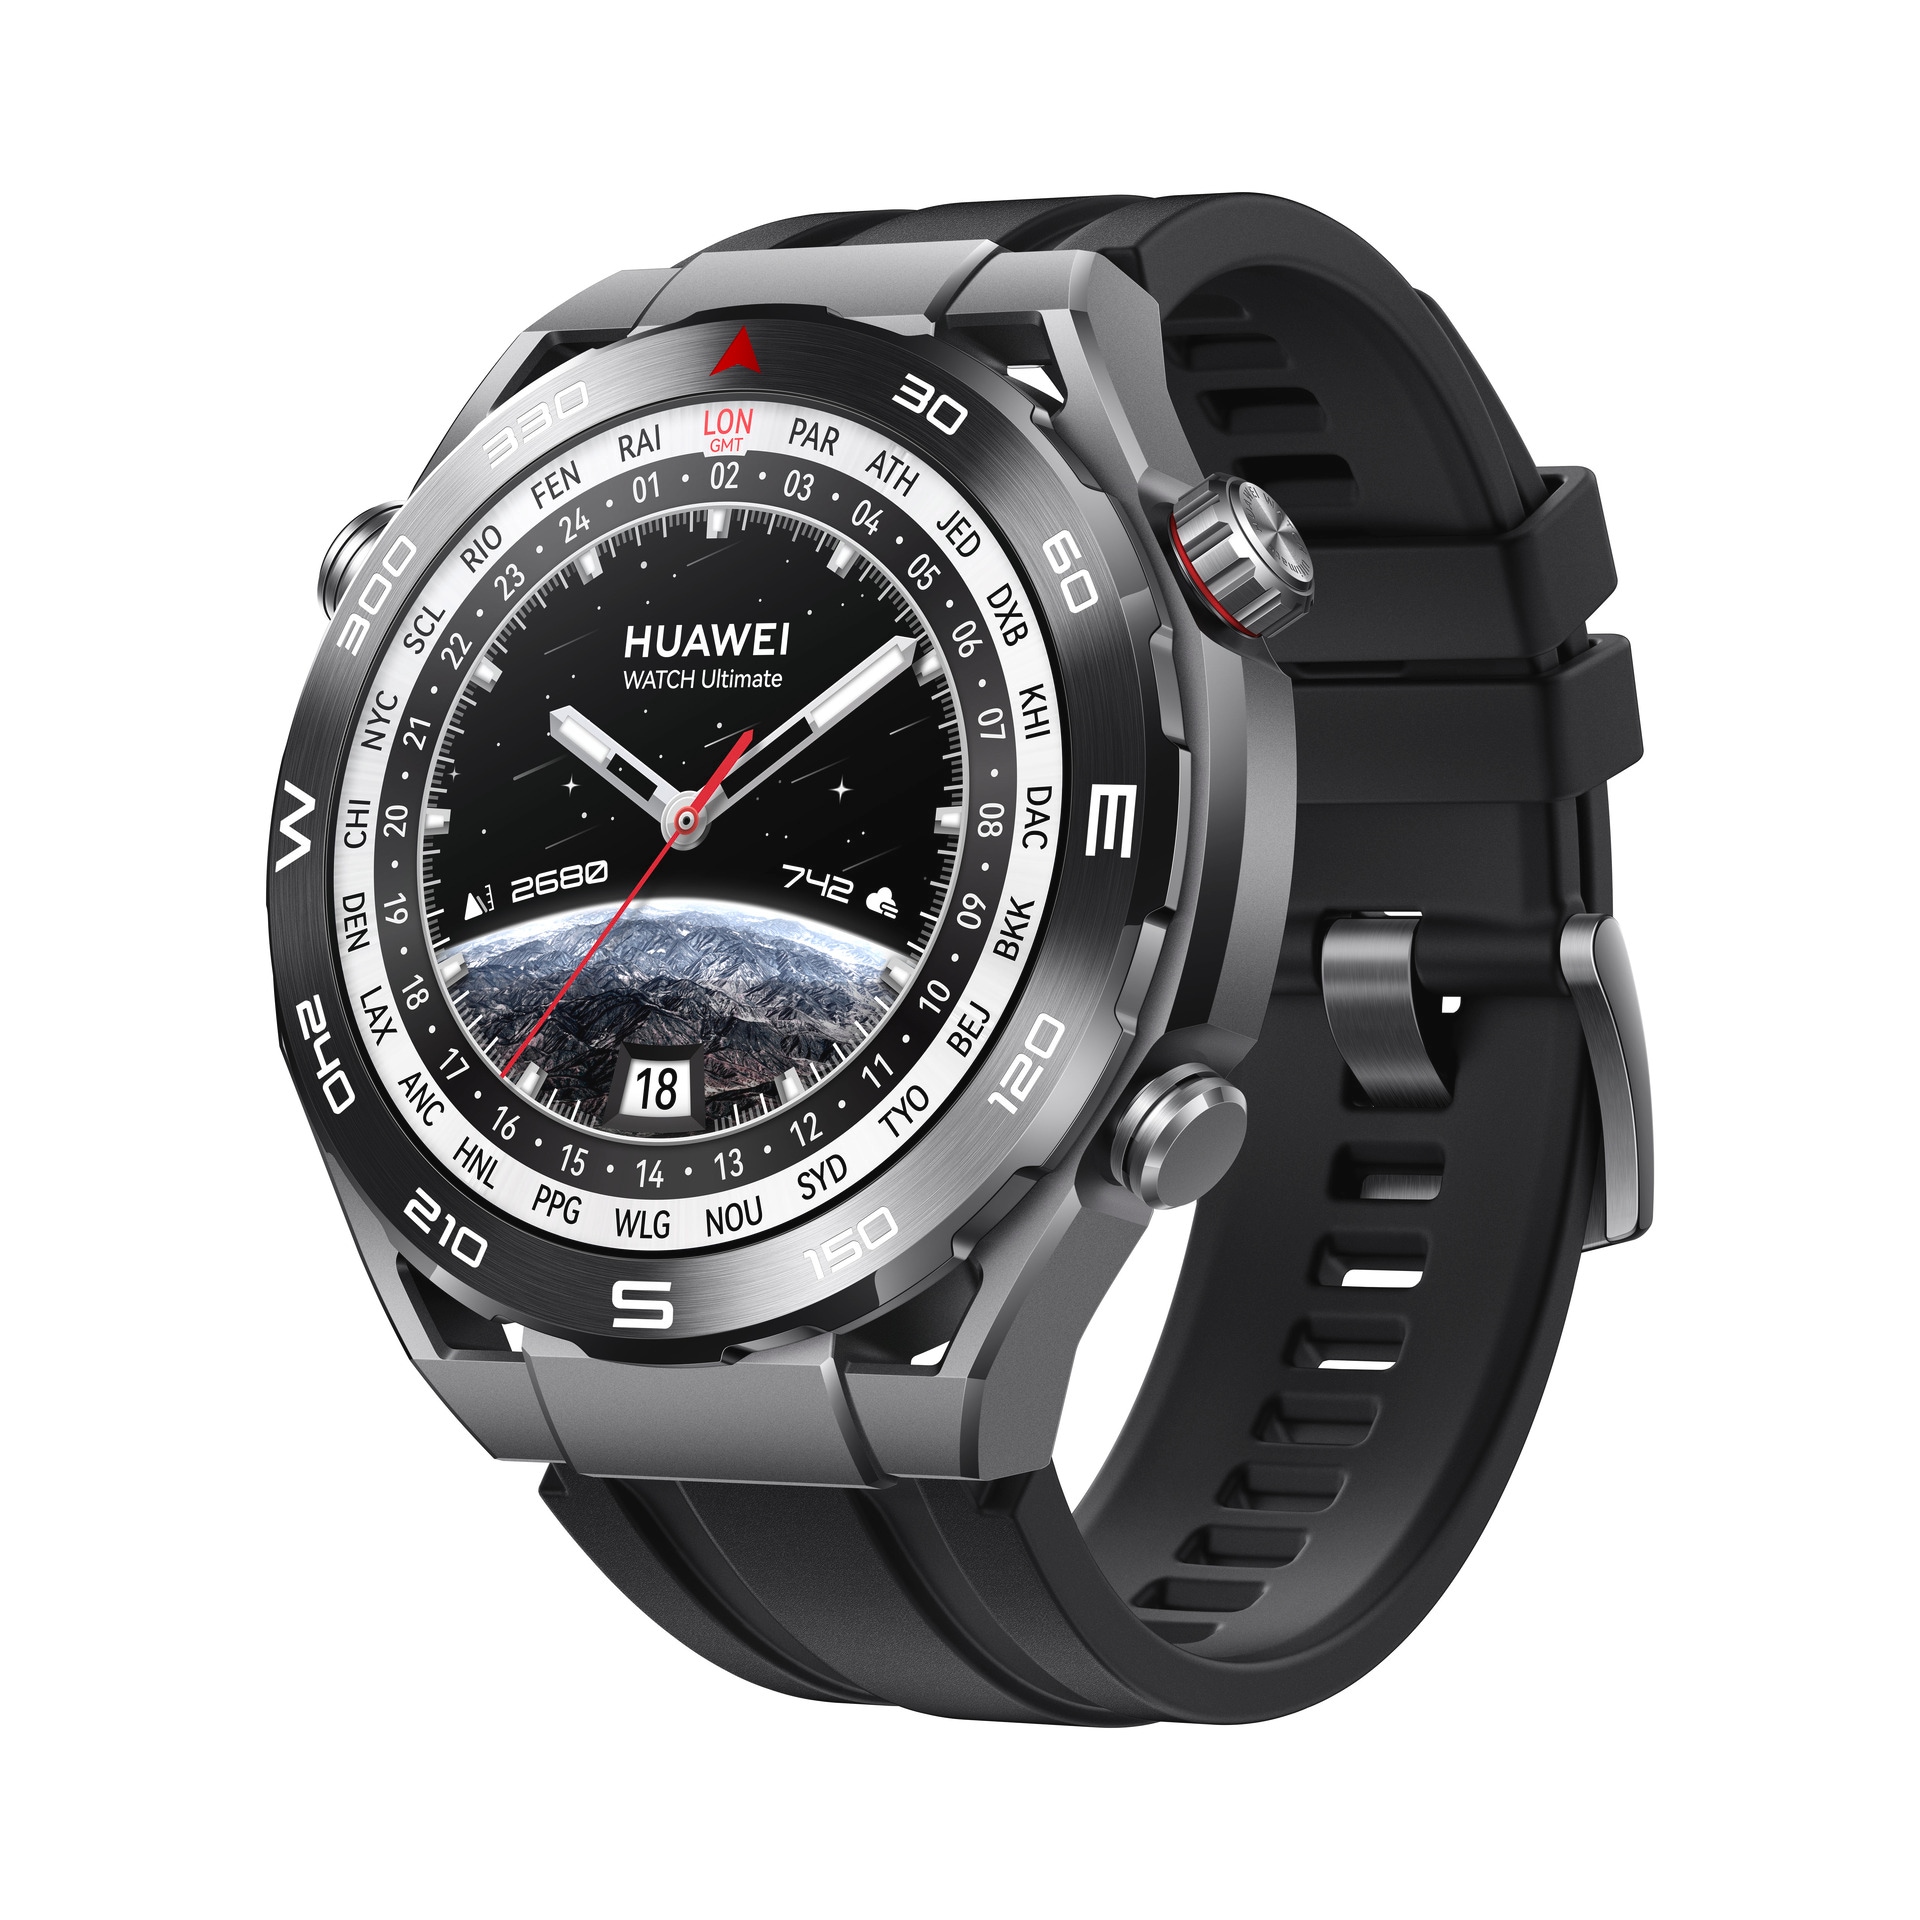 Huawei Smartwatch »Watch Ultimate«, online bestellen (Proprietär)